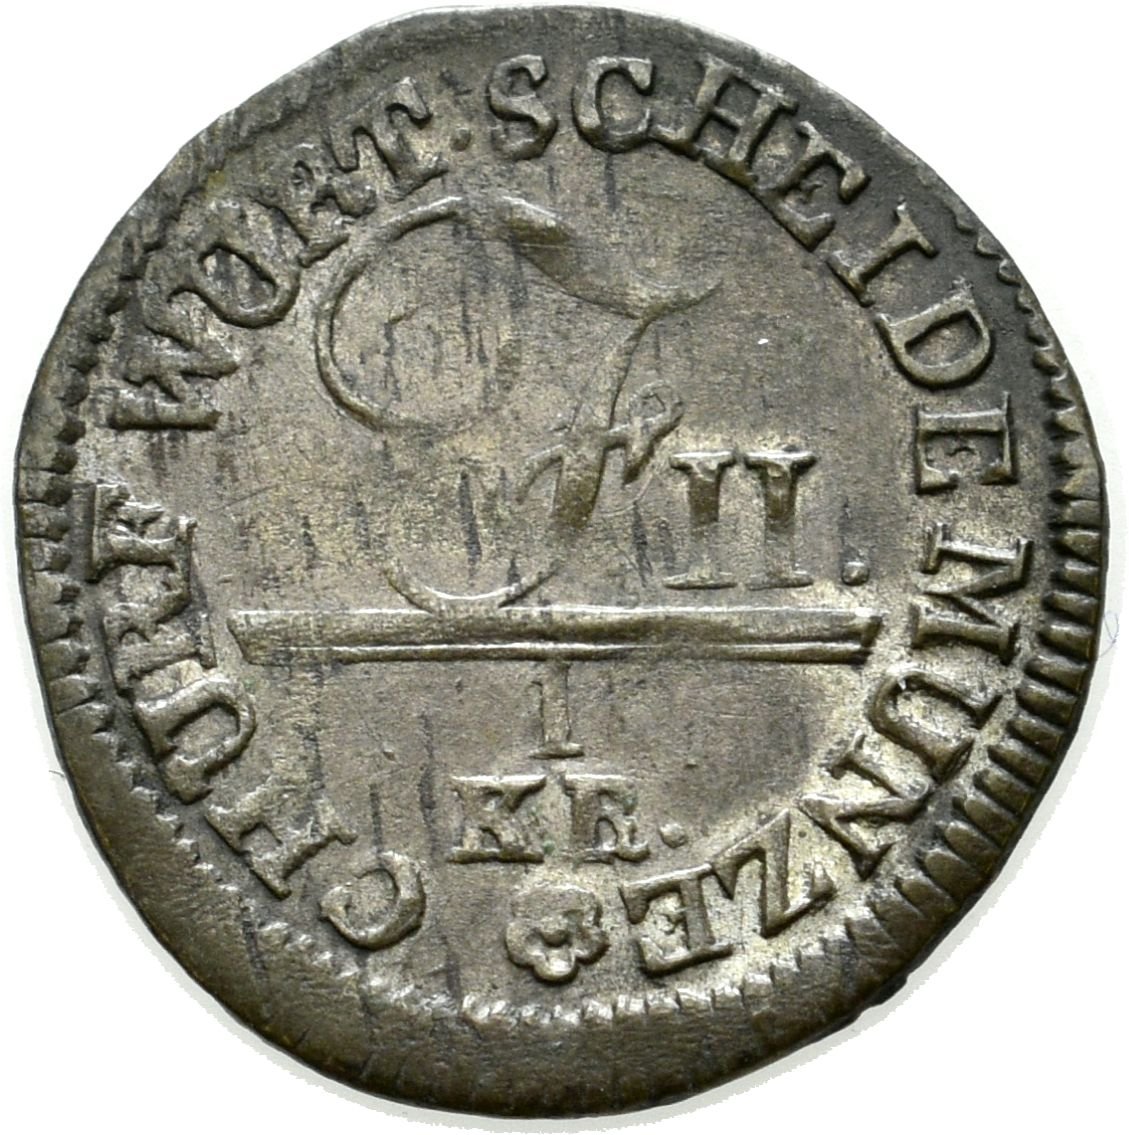 1 Kreuzer Scheidemünze aus dem Kurfürstentum Württemberg (Sparkassenverband Baden-Württemberg CC BY-NC-SA)